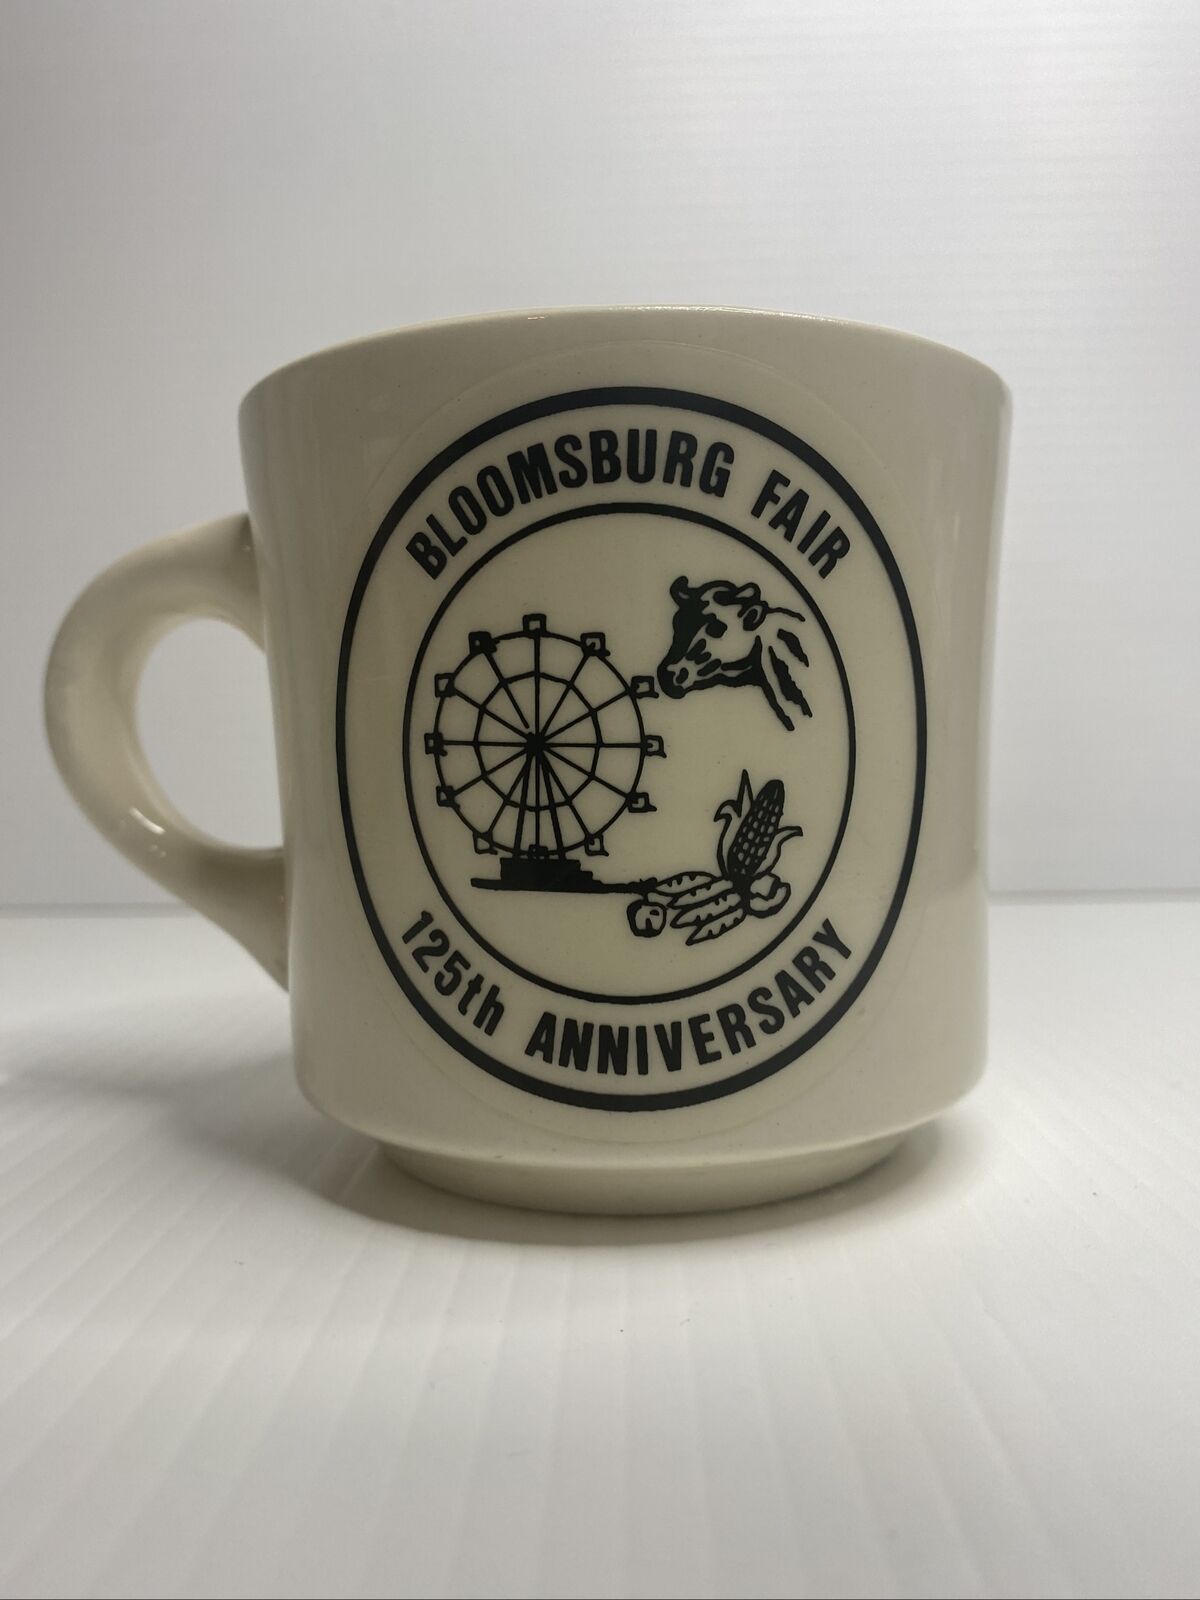 Vintage 1980 Bloomsburg Fair 125th Anniversary, Coffee Tea Cup Mug ￼